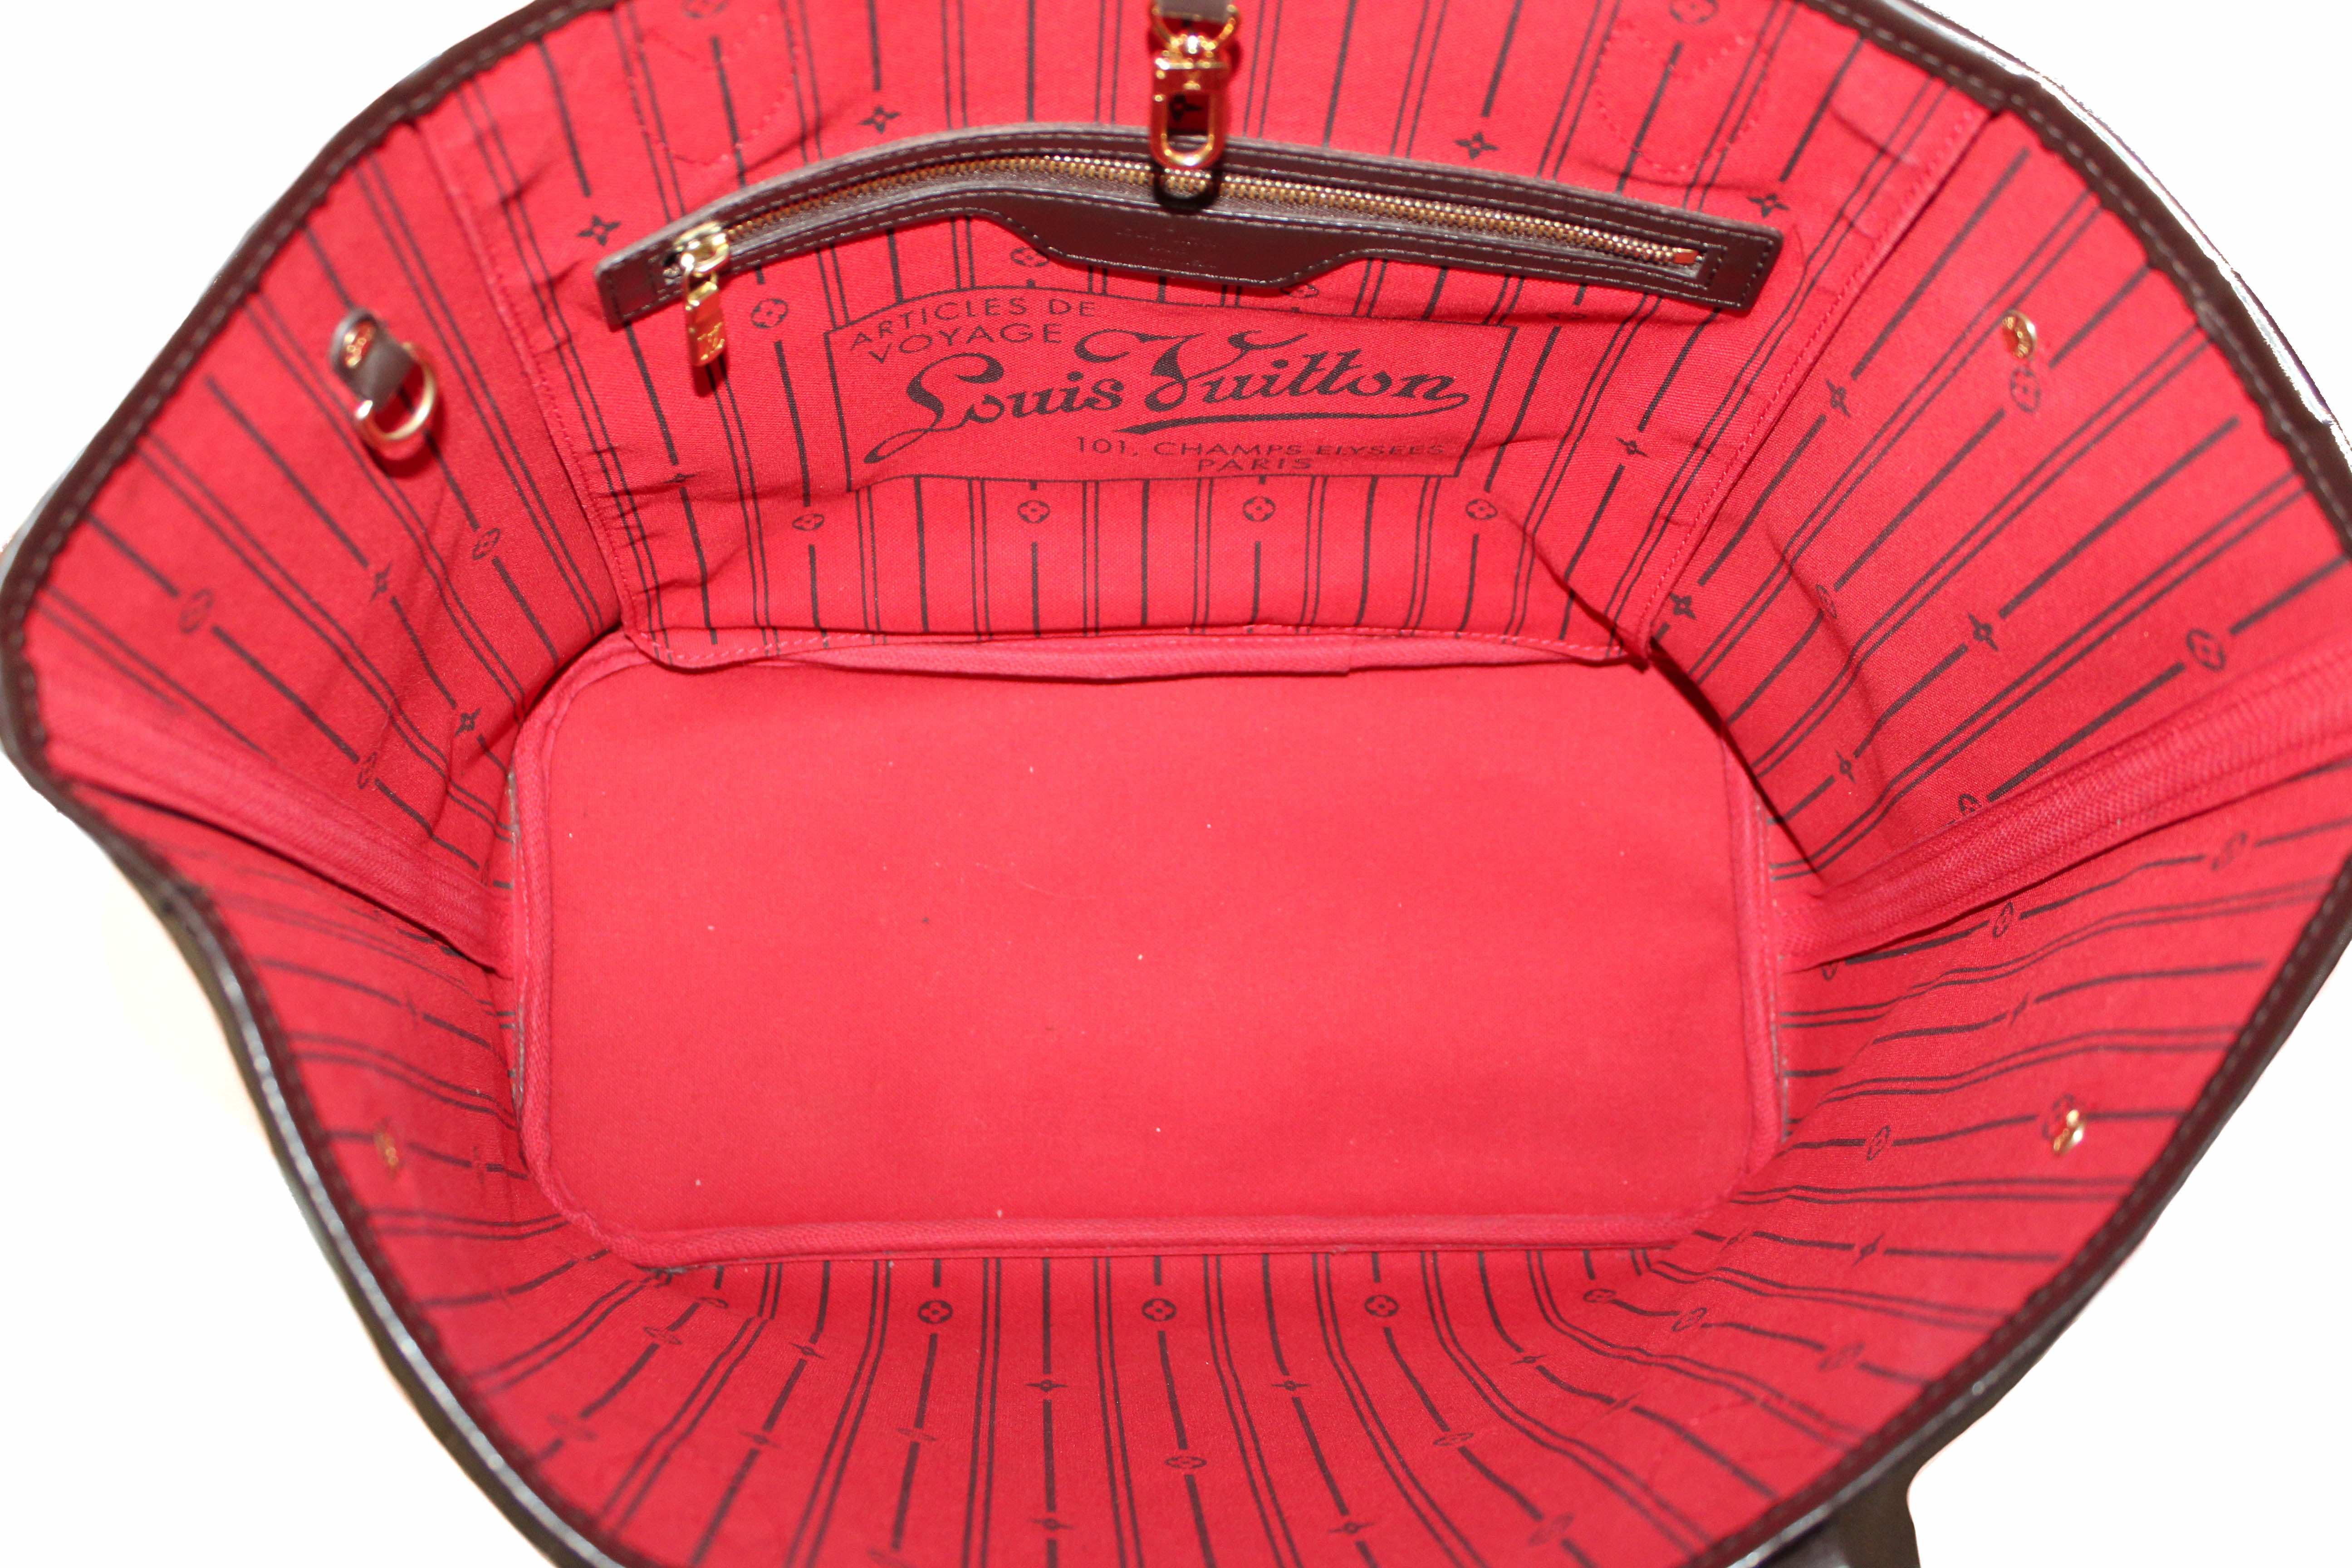 Authentic Louis Vuitton Damier Ebene Neverfull Tote Shoulder Bag